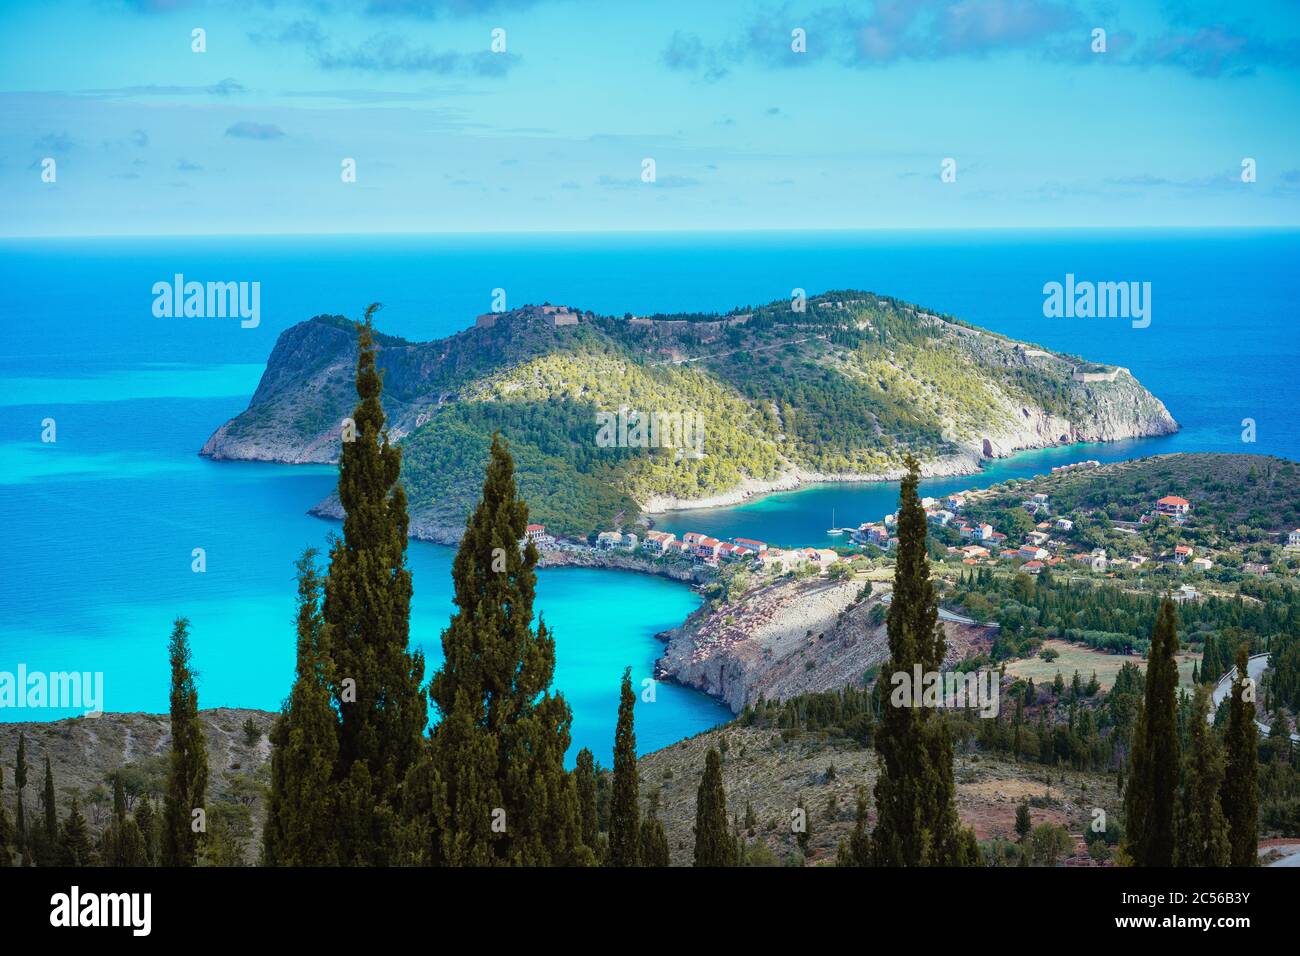 Assos village and coastline of beautiful blue sea. Cypress trees in foreground. Kefalonia island, Greece. Stock Photo